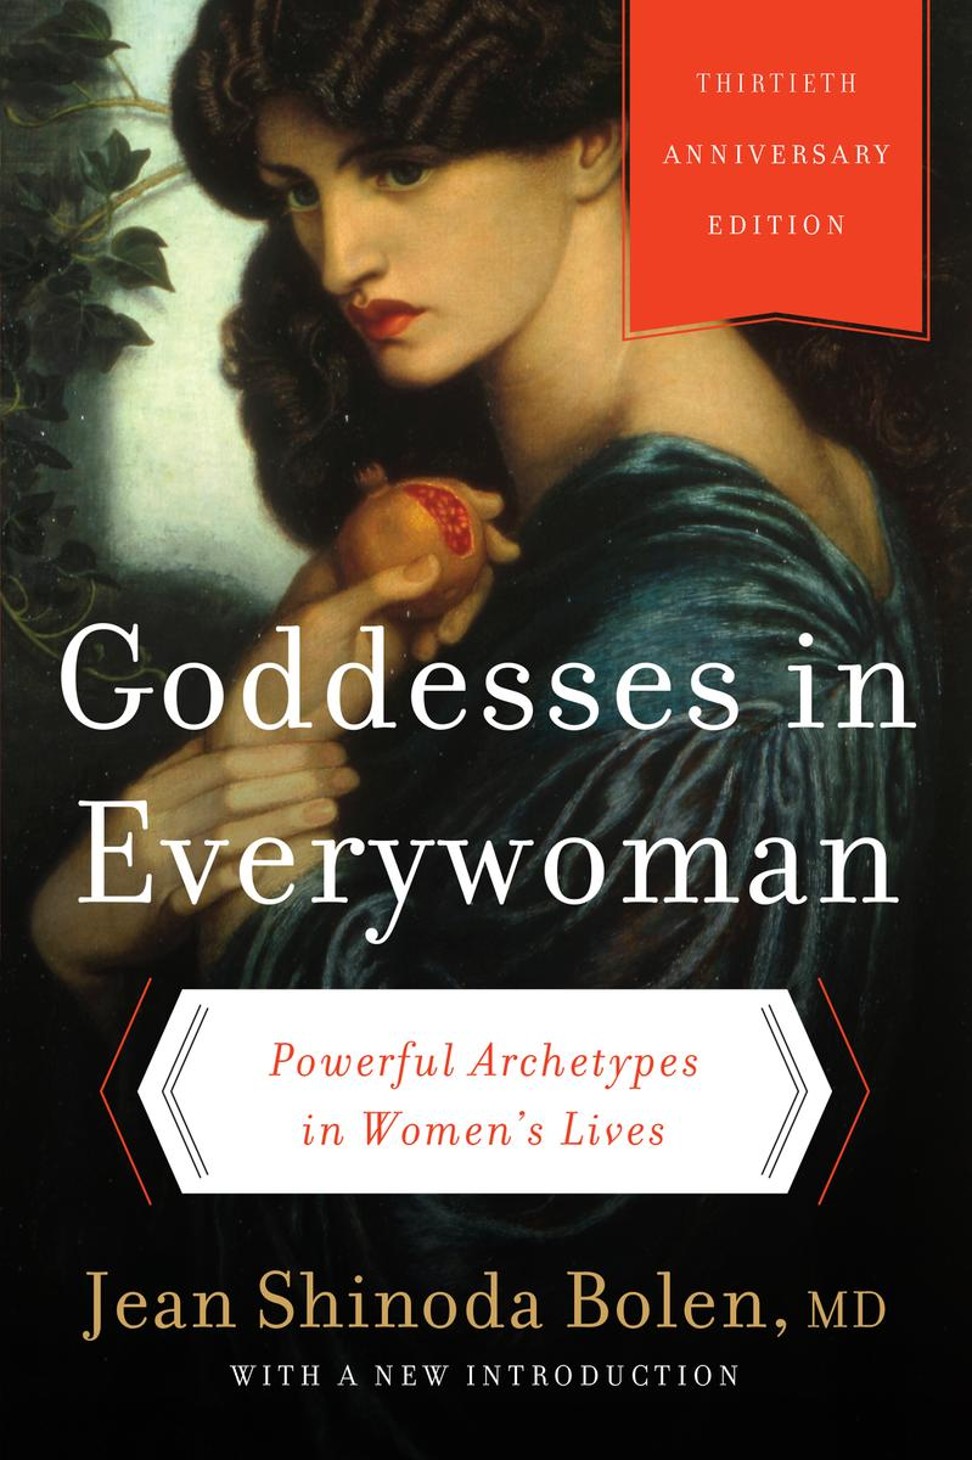 Goddesses in Everywoman by Jean Shinoda Bolen.